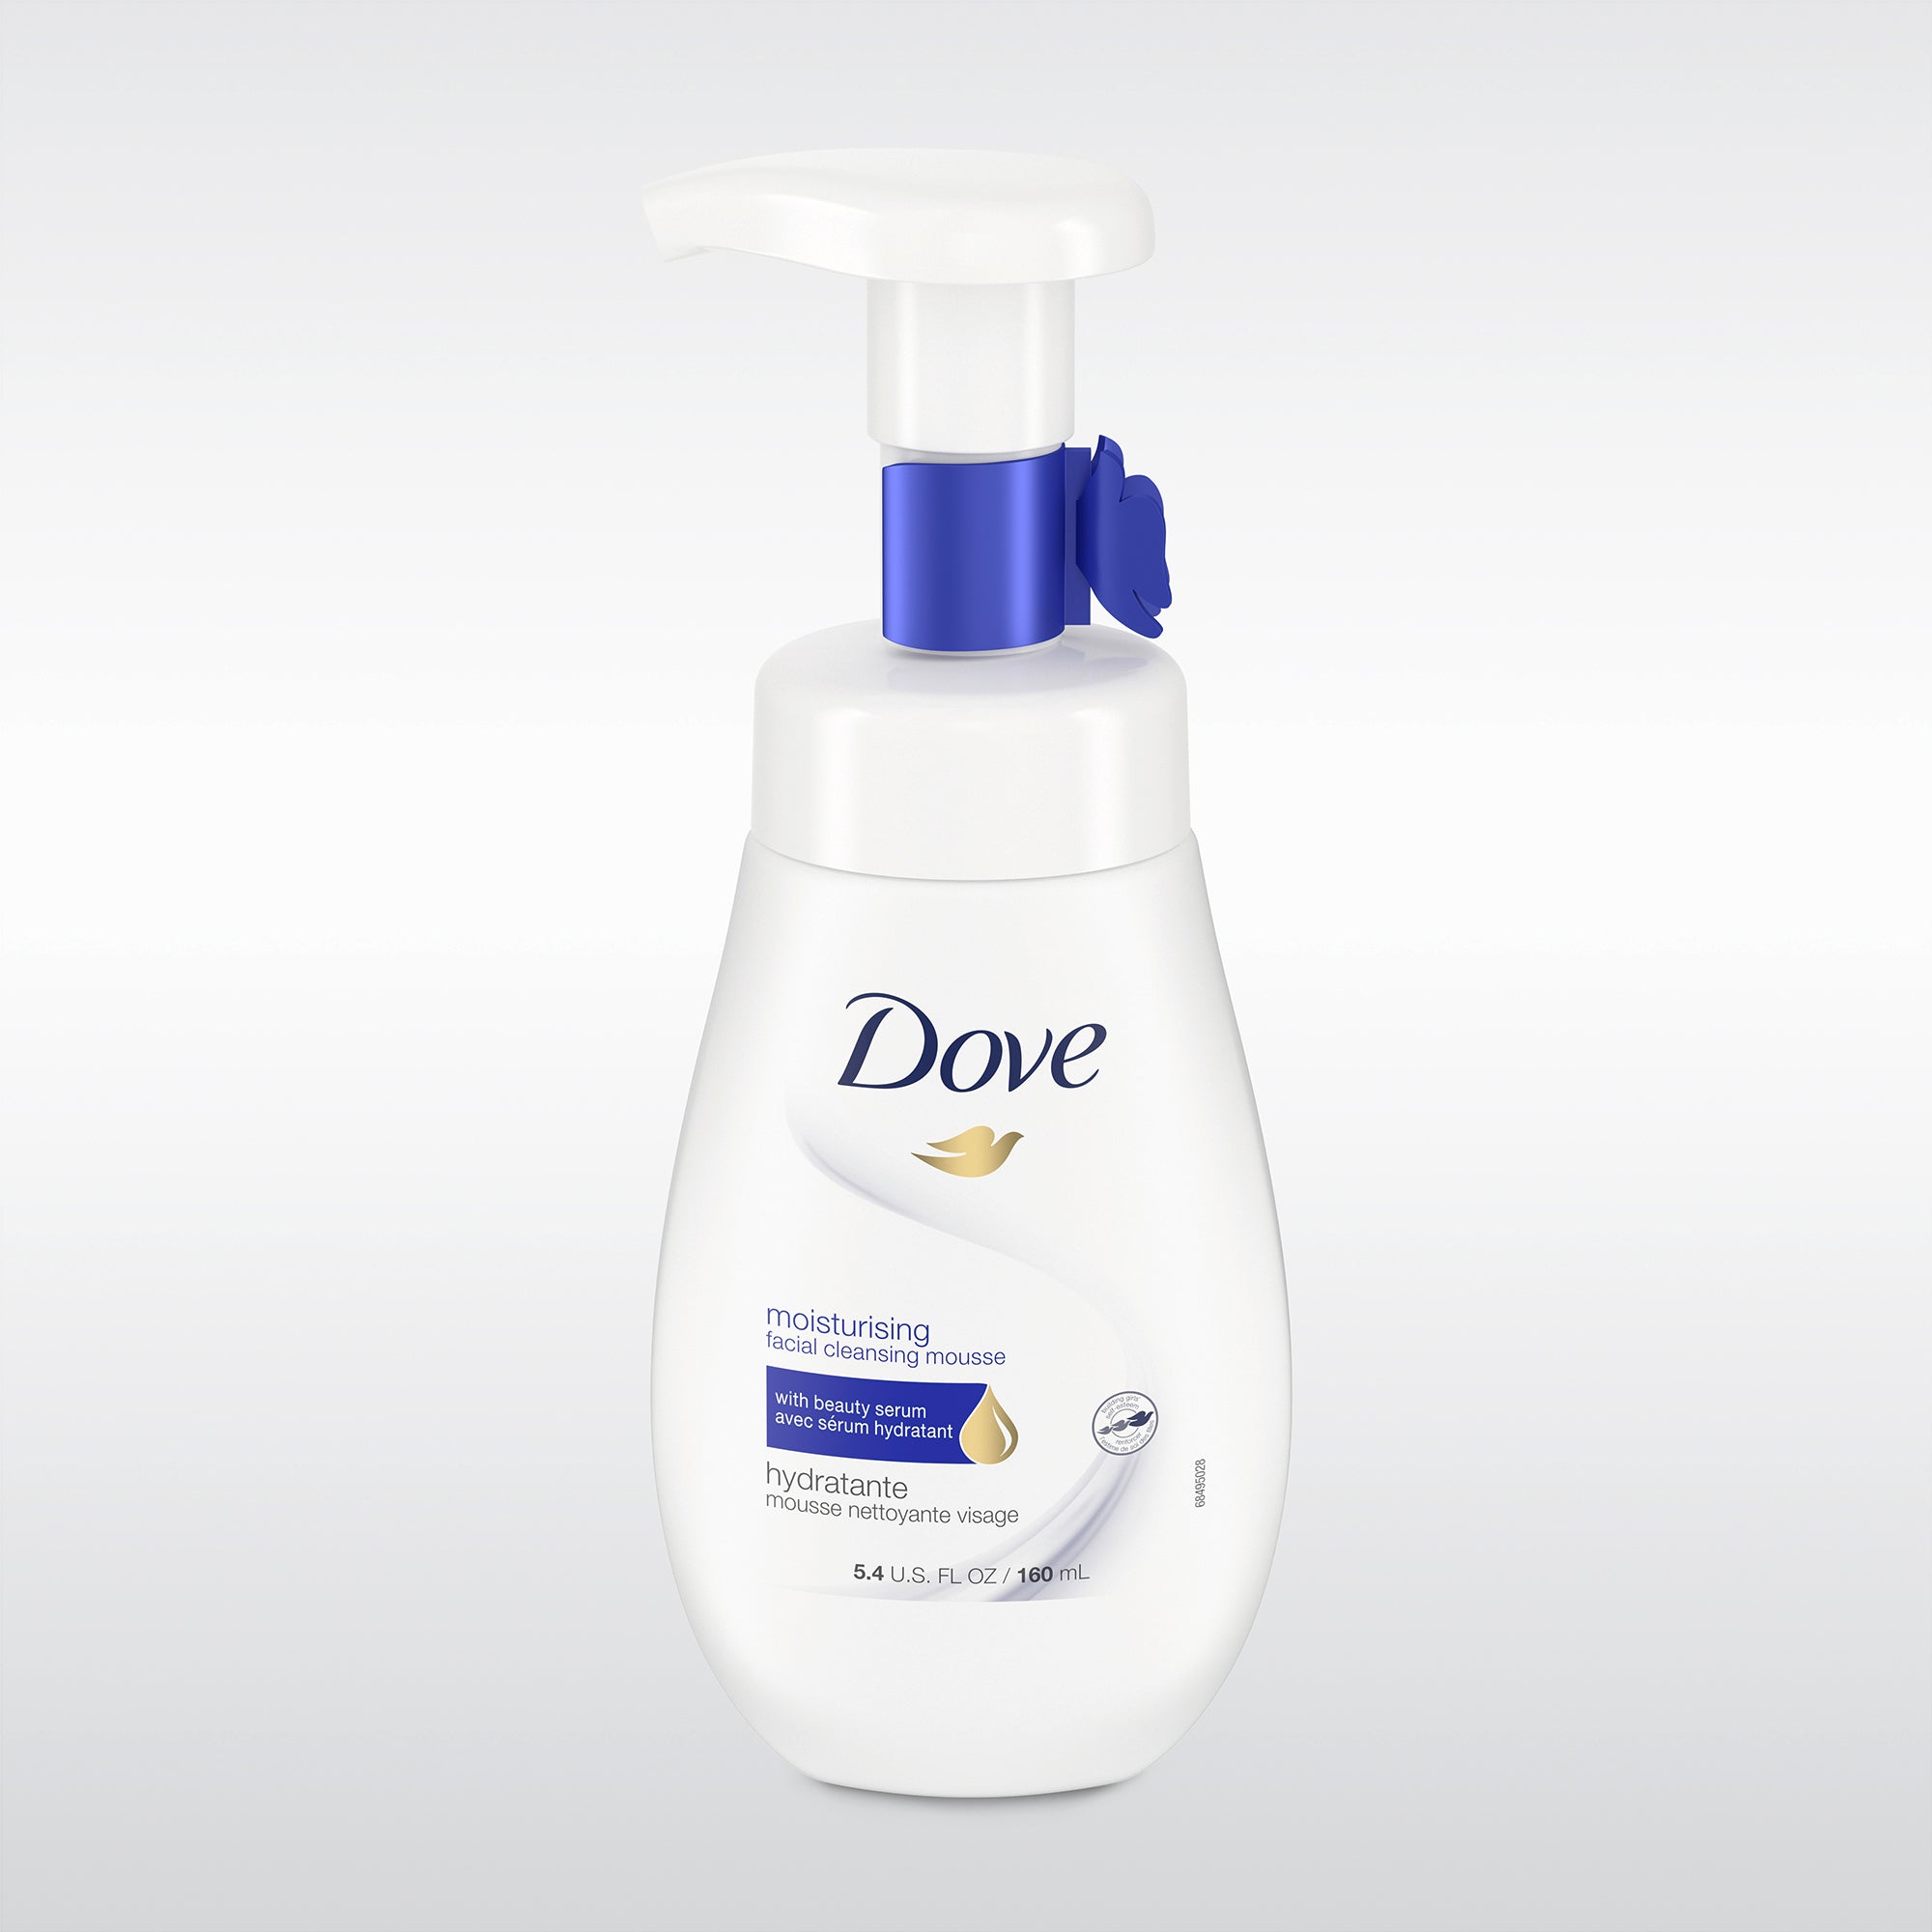 Dove moisturising facial cleansing mousse